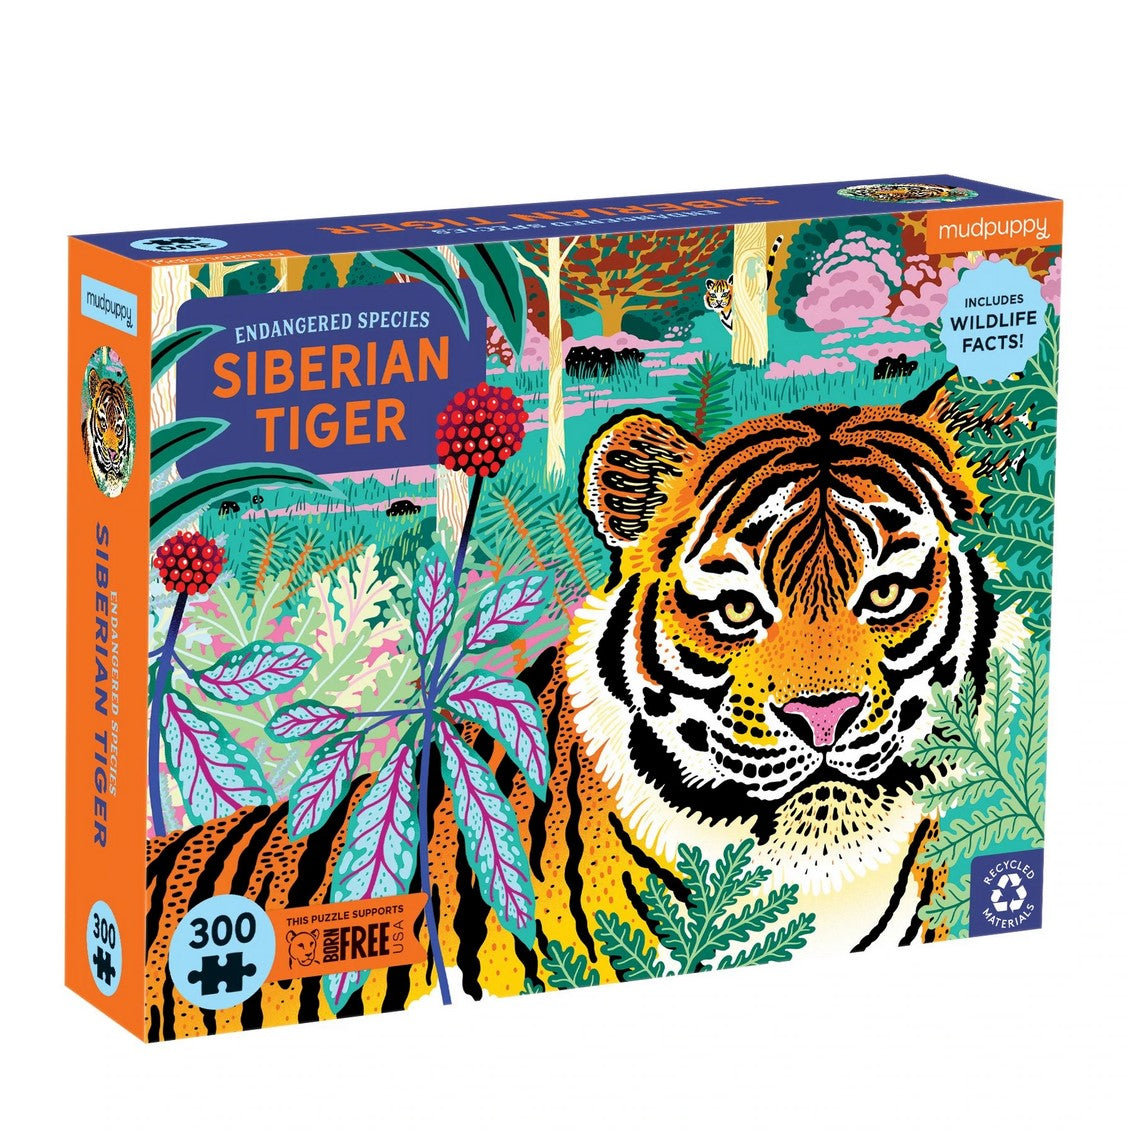 Endangered Species: Siberian Tiger 300 Piece Puzzle